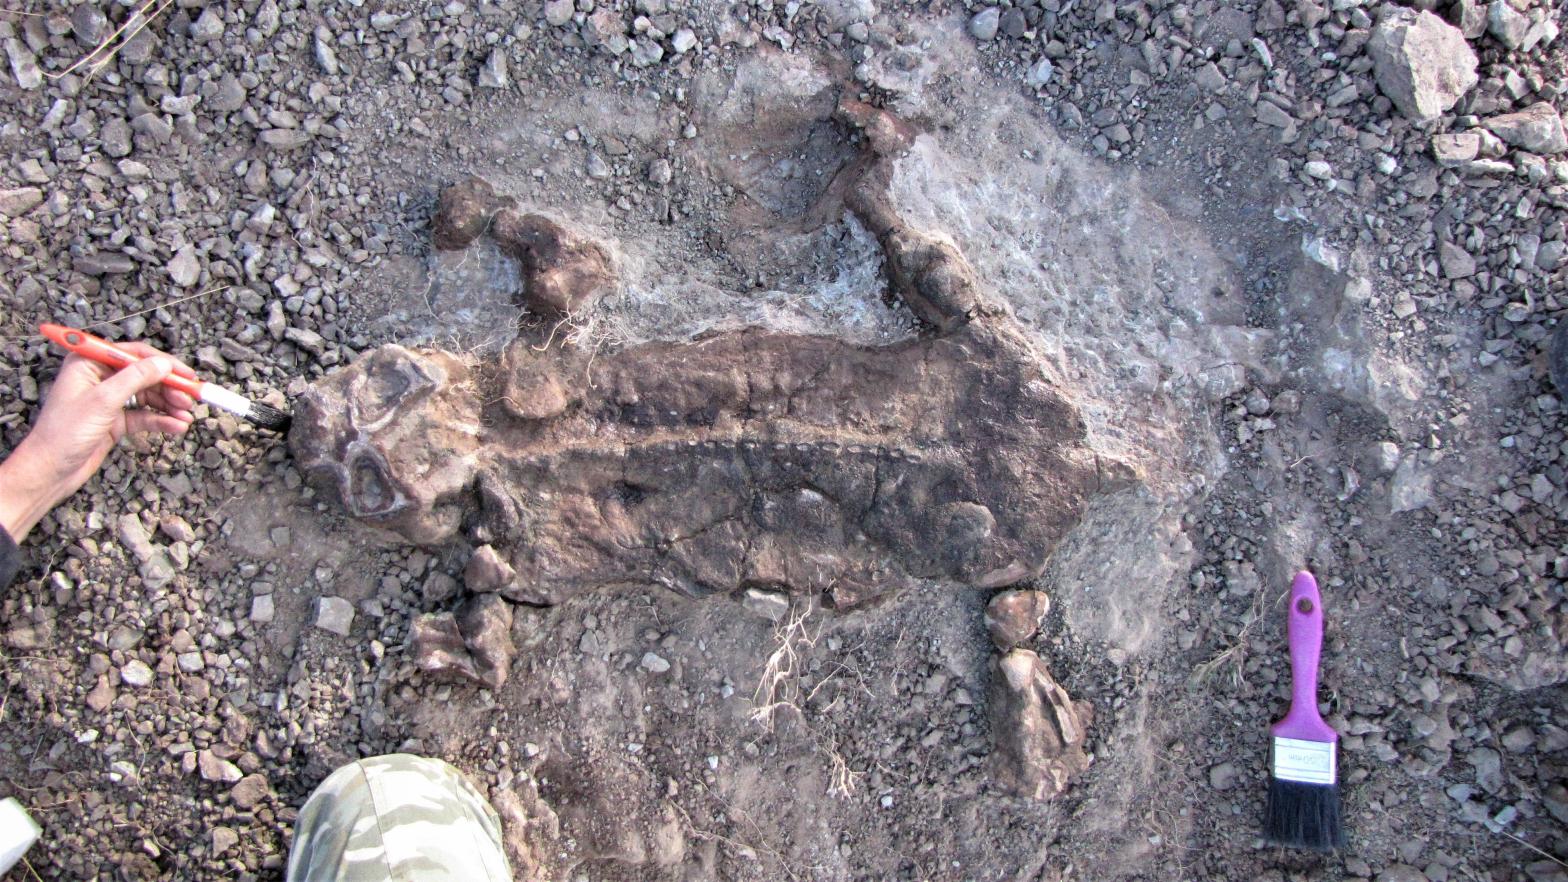 Juvenile Lystrosaurus murrayi skeleton with enveloping layer interpreted as mummified skin.  (Photo: Courtesy Roger Smith)